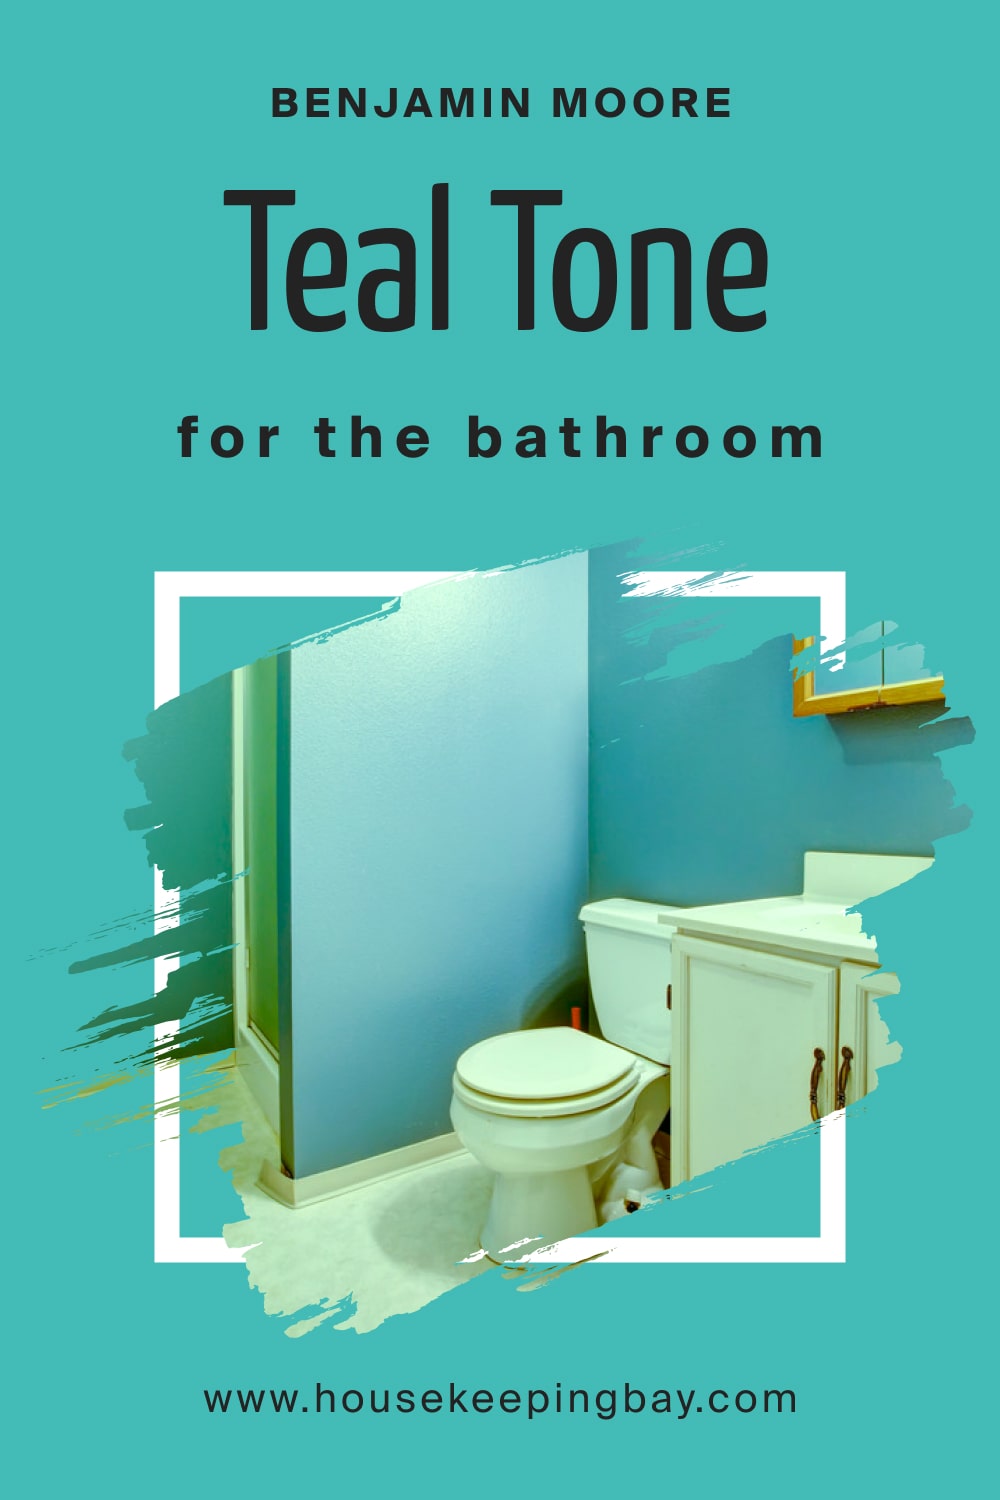 Benjamin Moore. BM Teal Tone 663 in the Bathroom